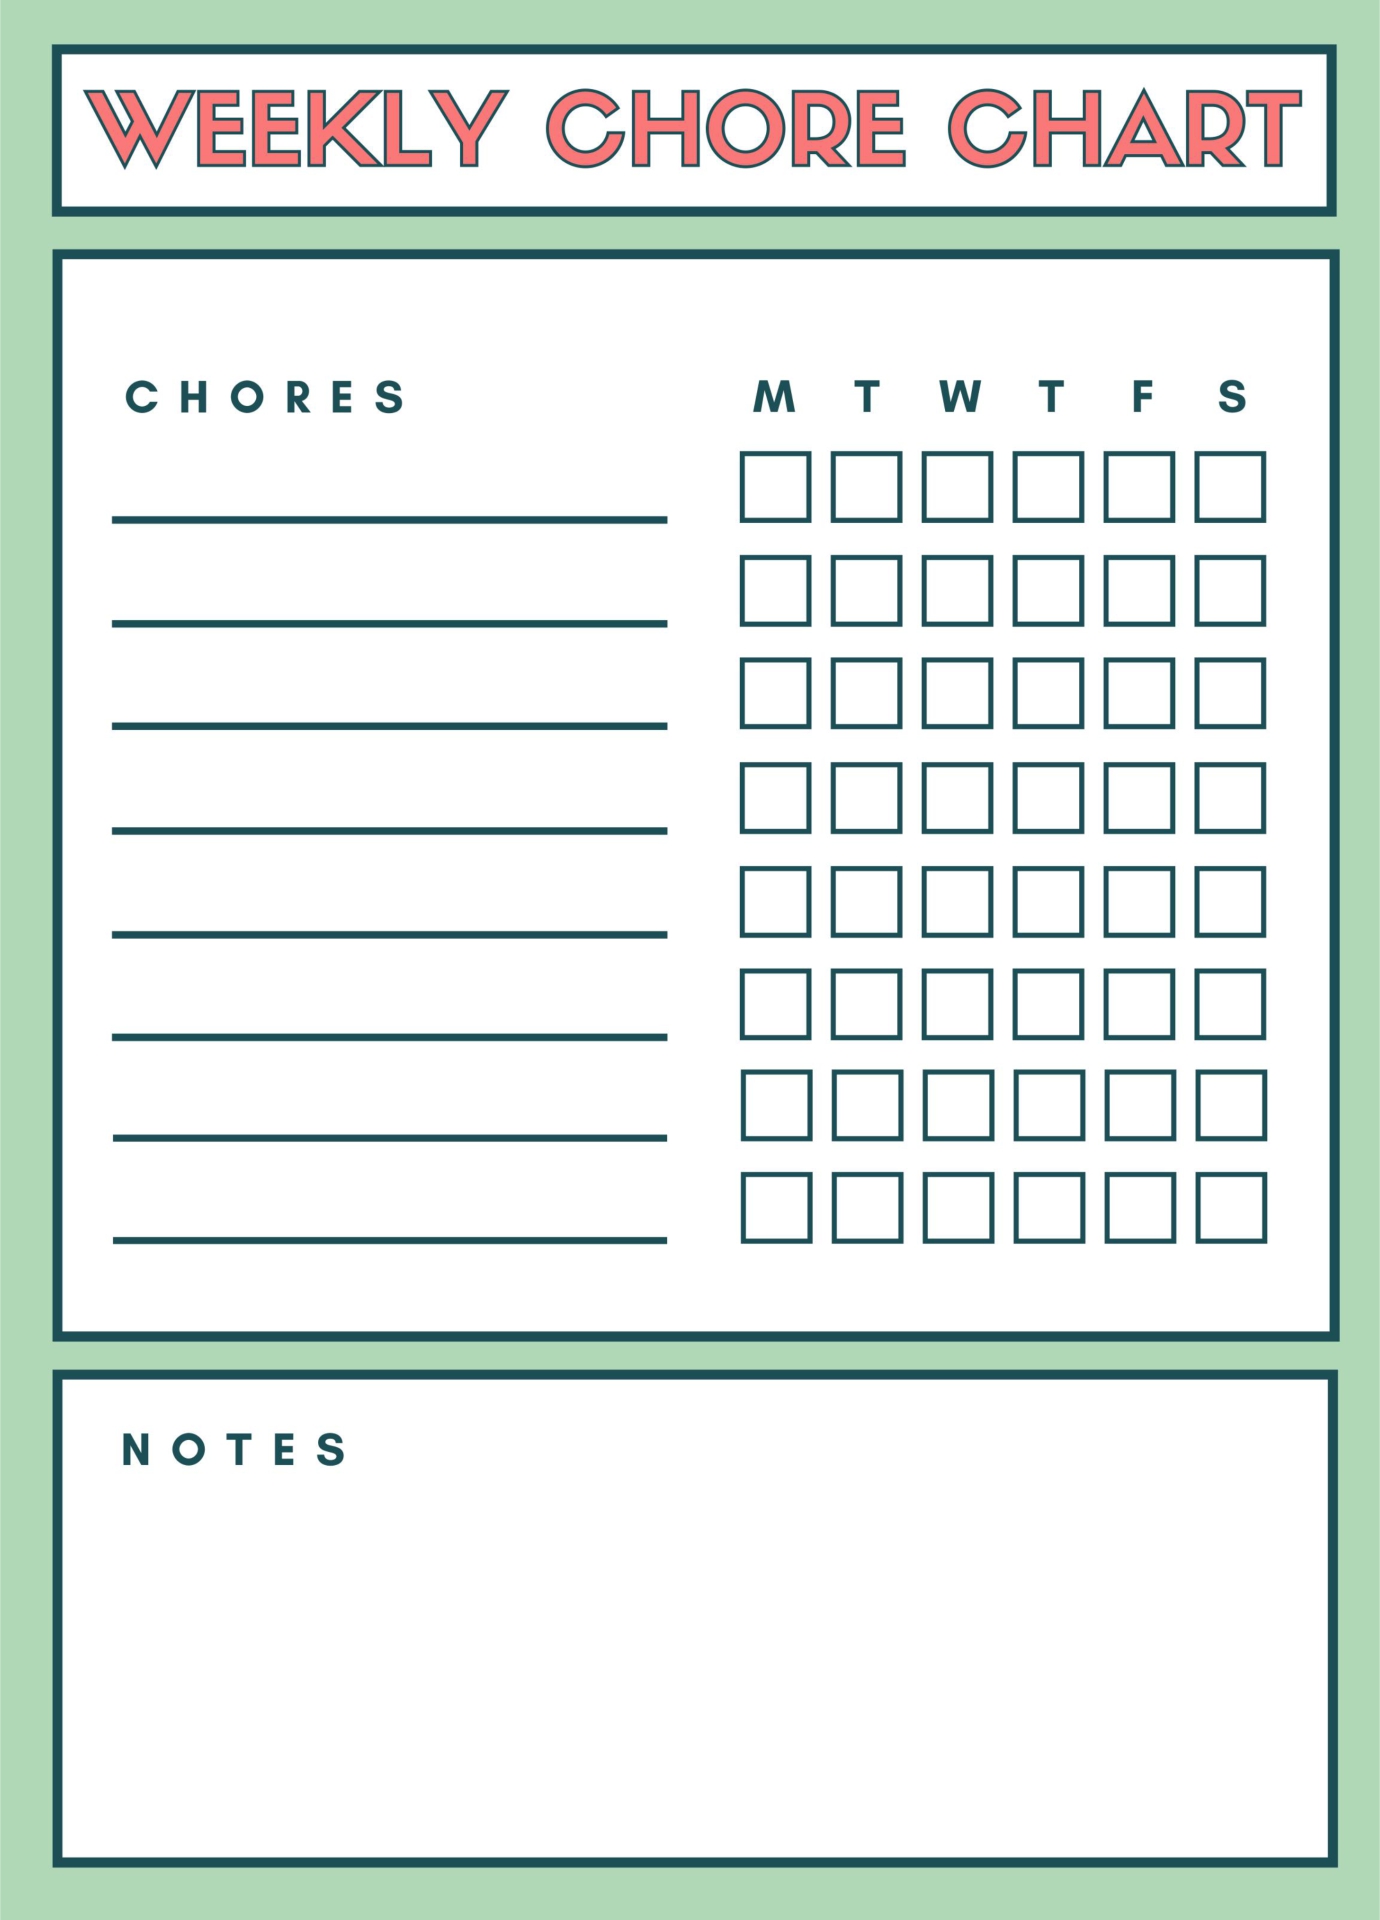 calendar-template-chores-2-doubts-you-should-clarify-about-calendar